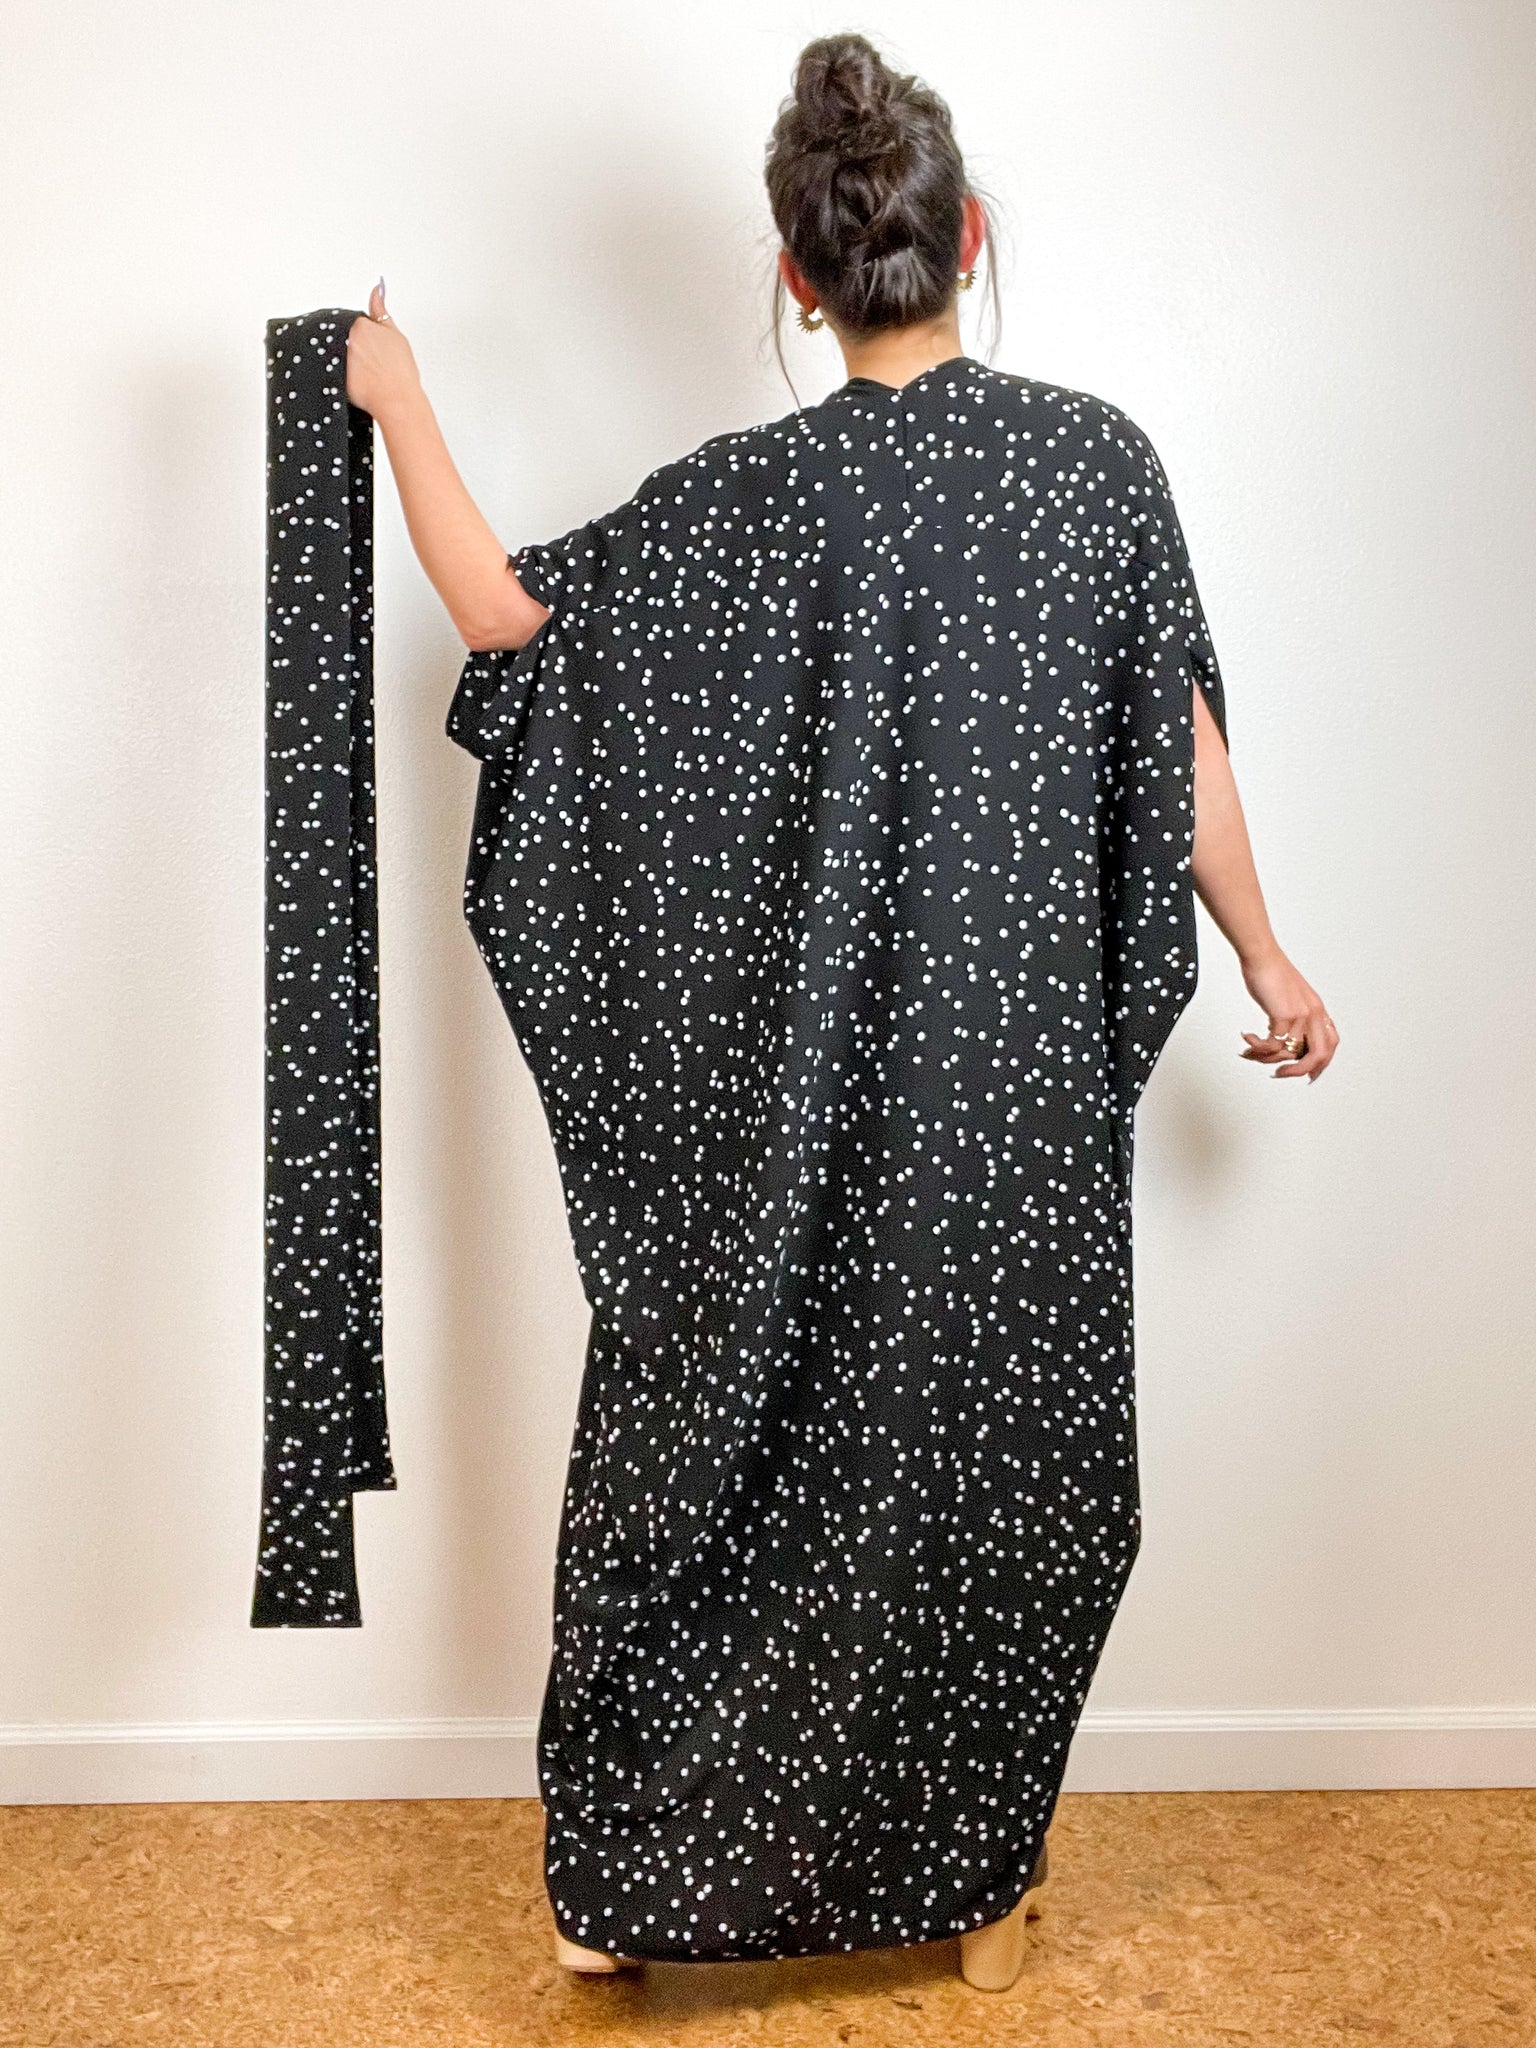 High Low Kimono Black White Dots Bubble Crepe